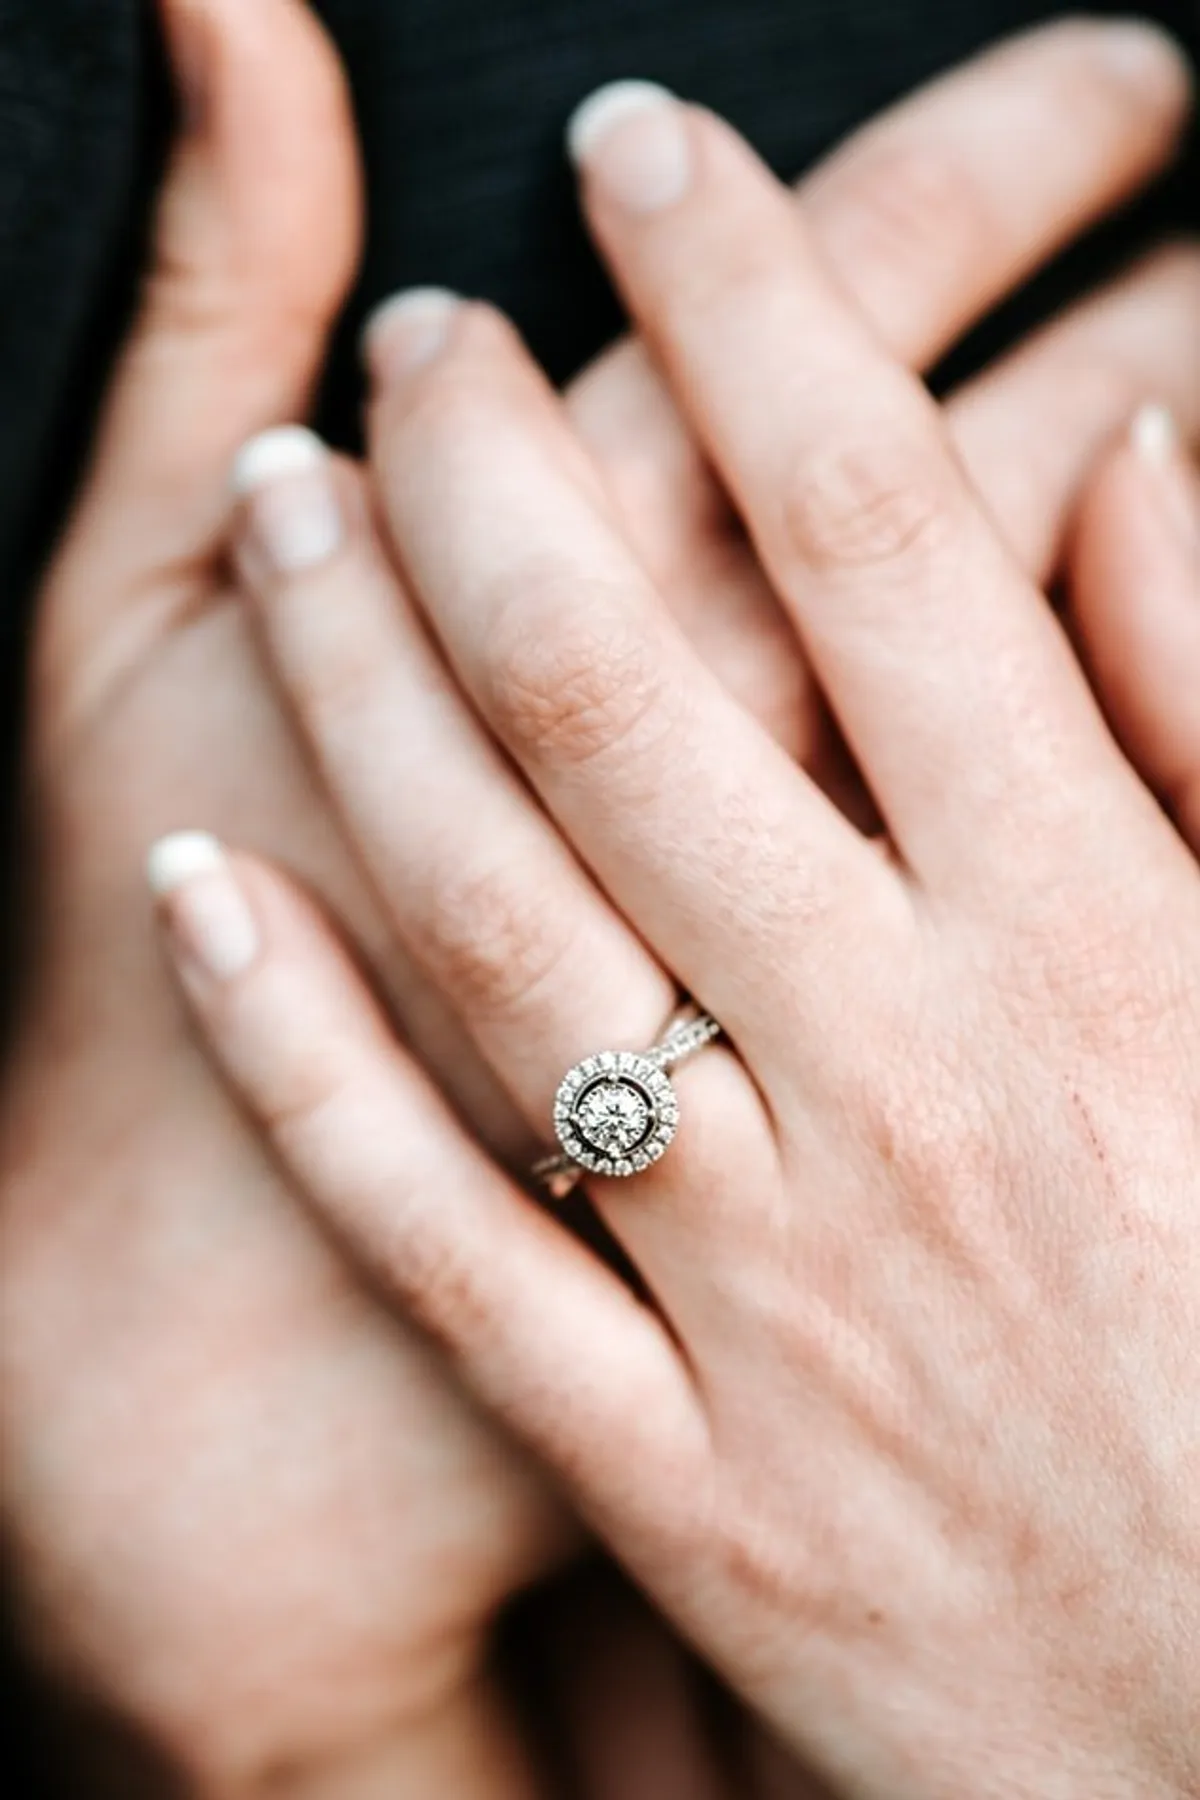 The engagement ring | Source: Unsplash